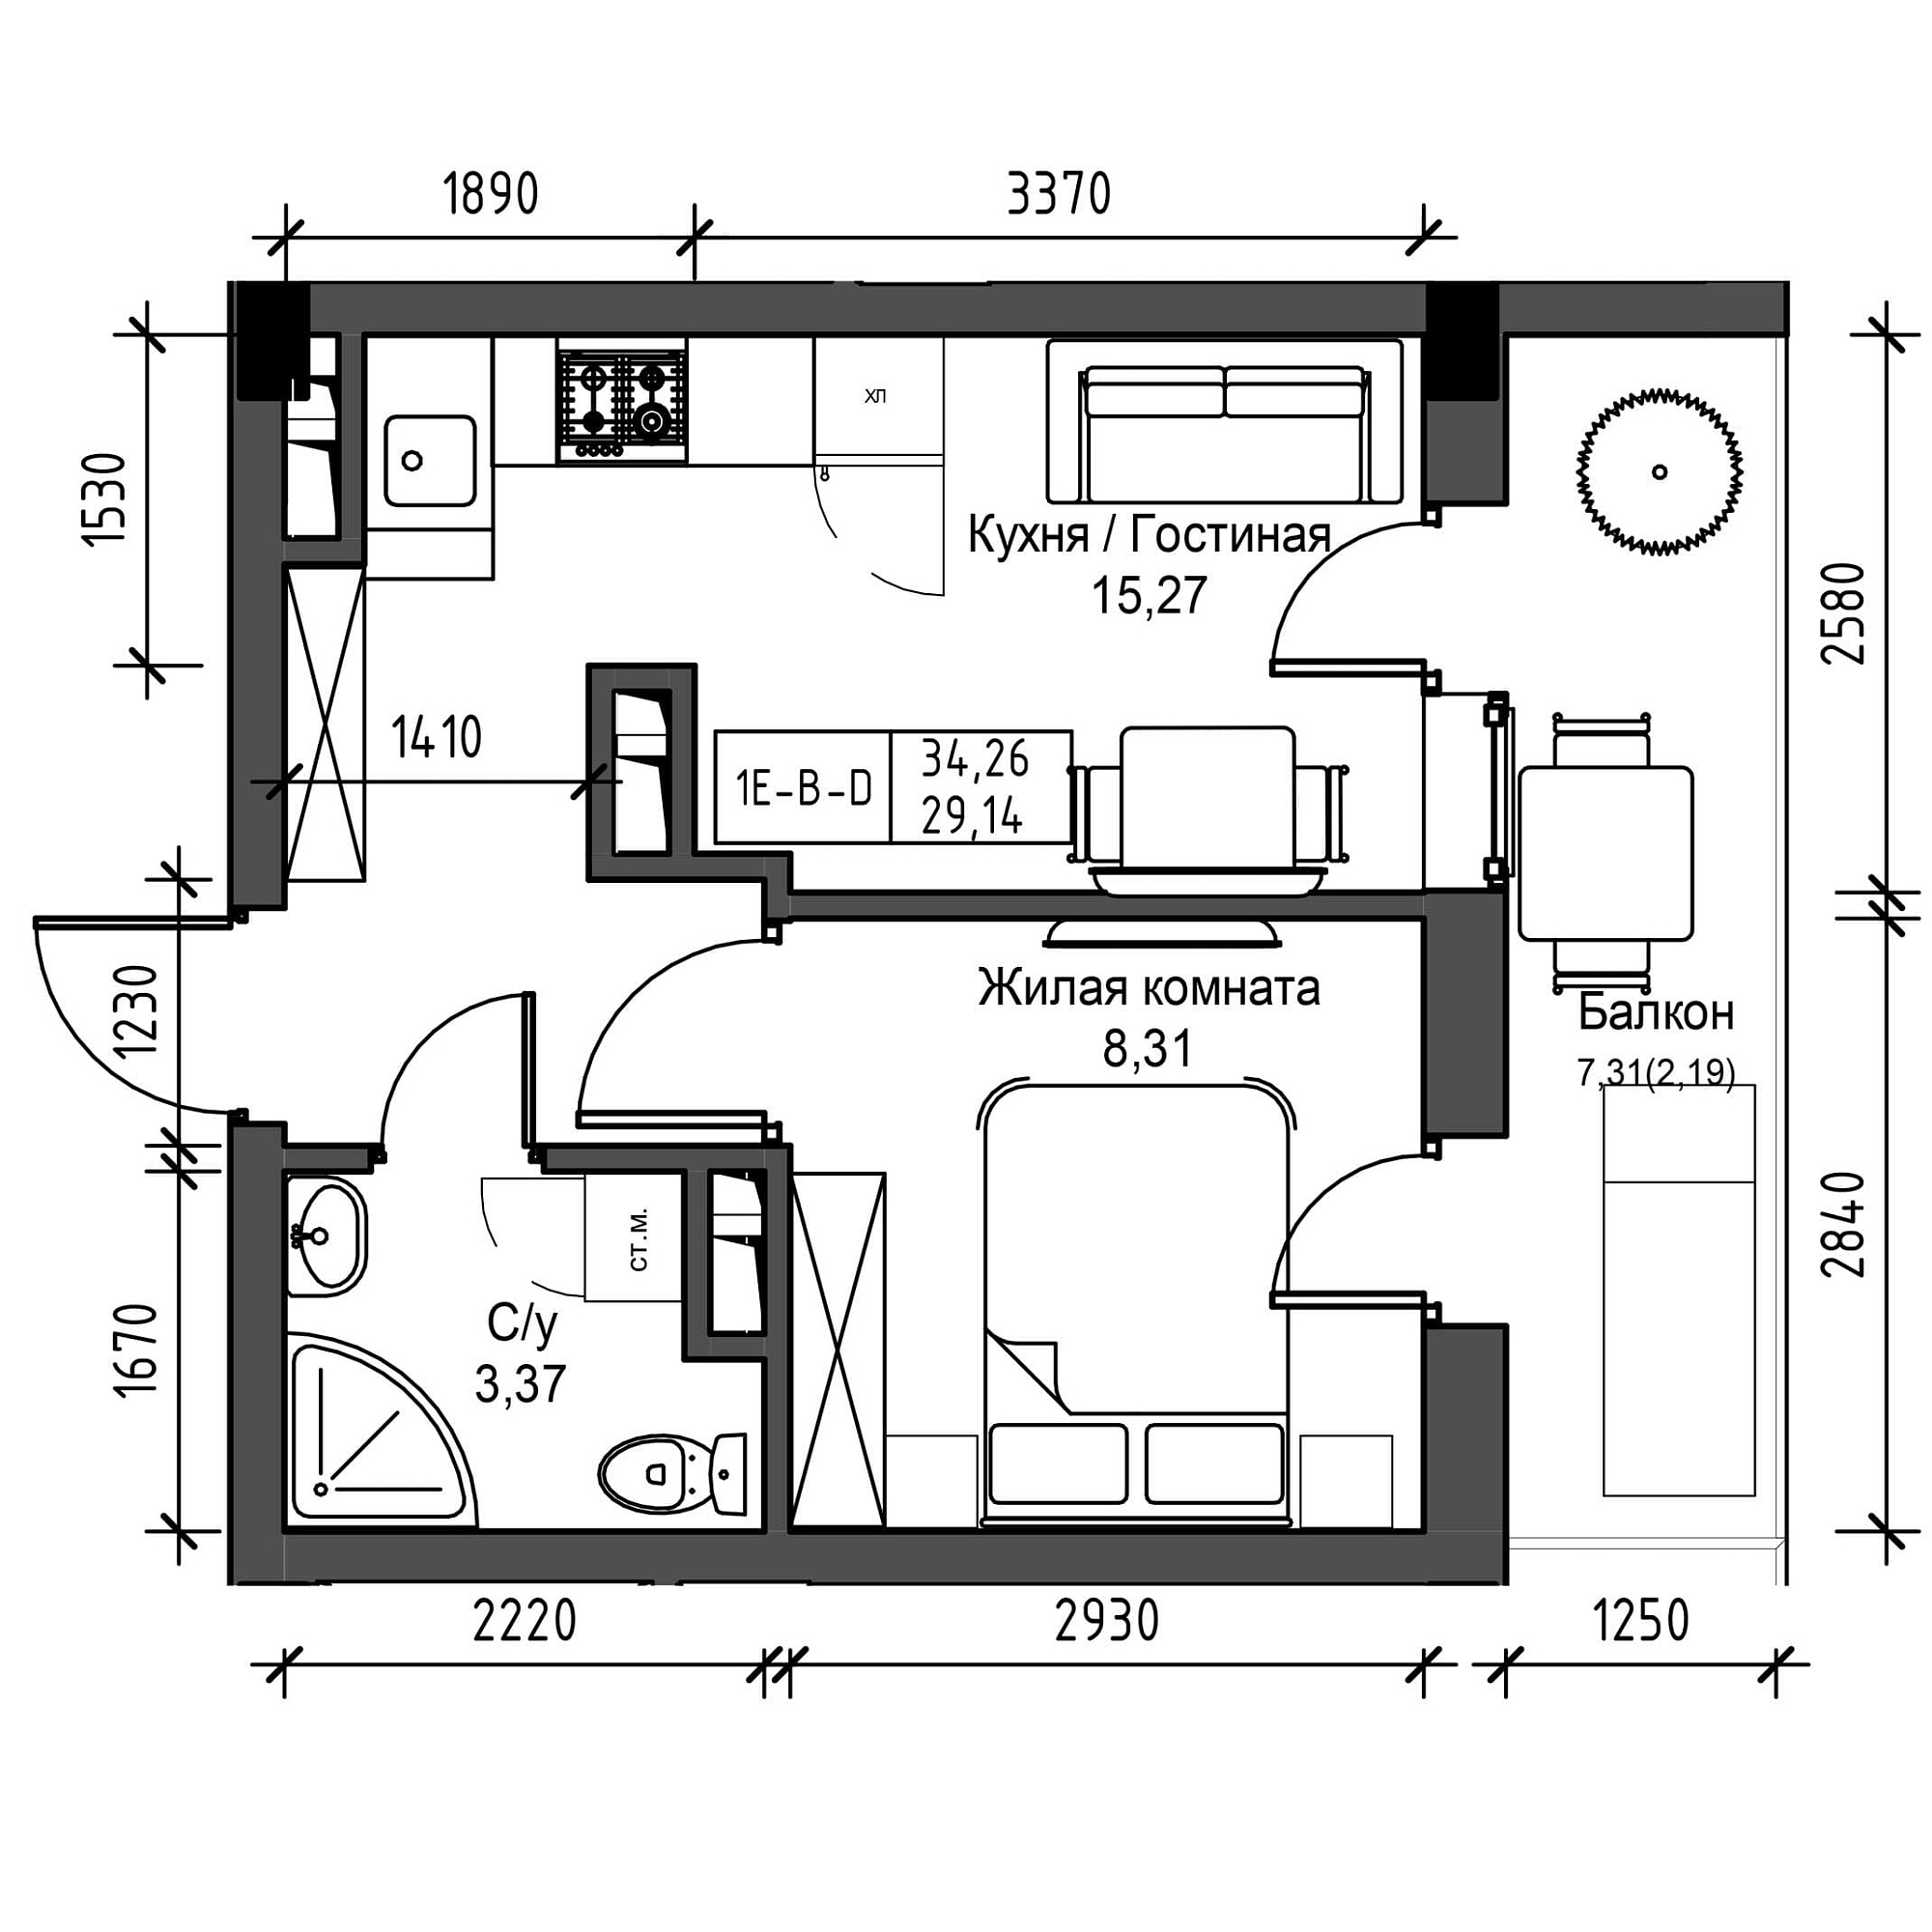 Планування 1-к квартира площею 29.14м2, UM-001-07/0023.